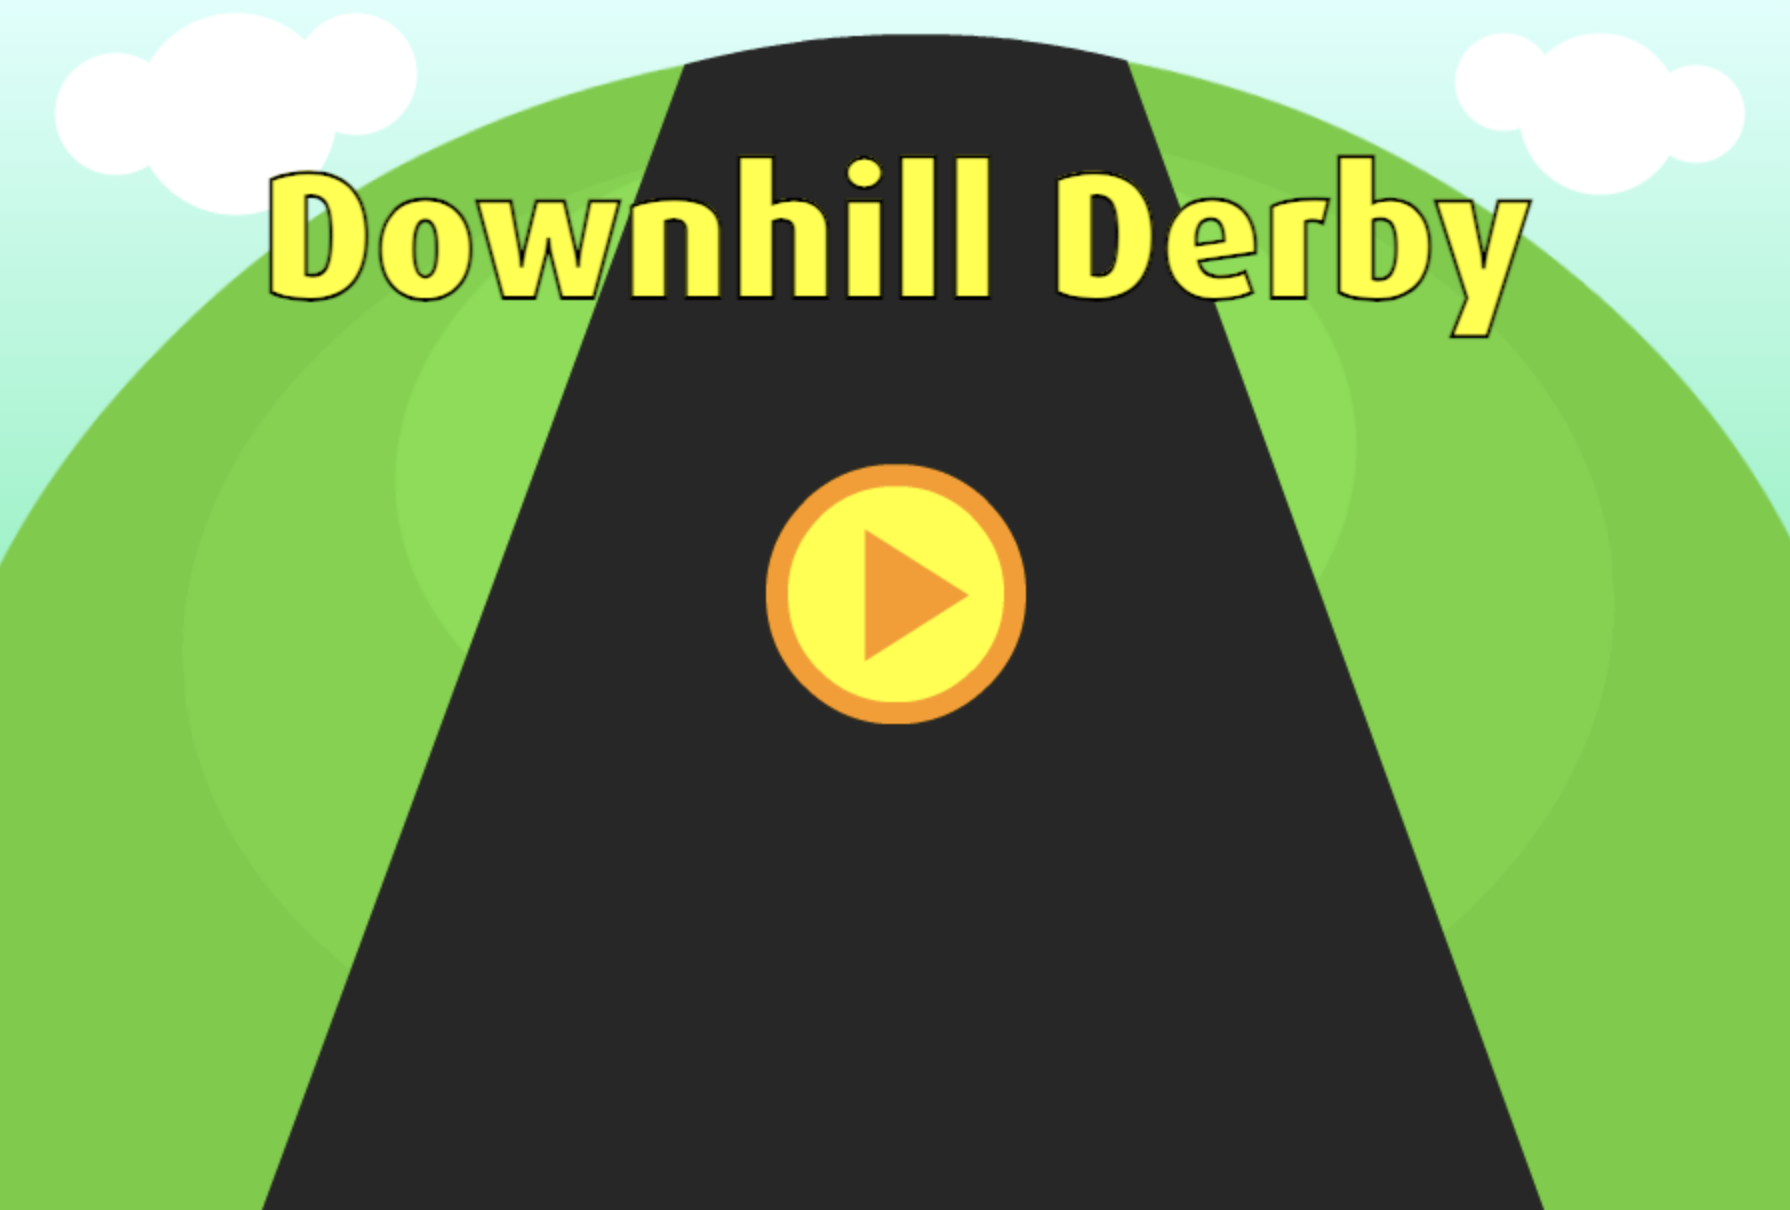 Downhill Derby game